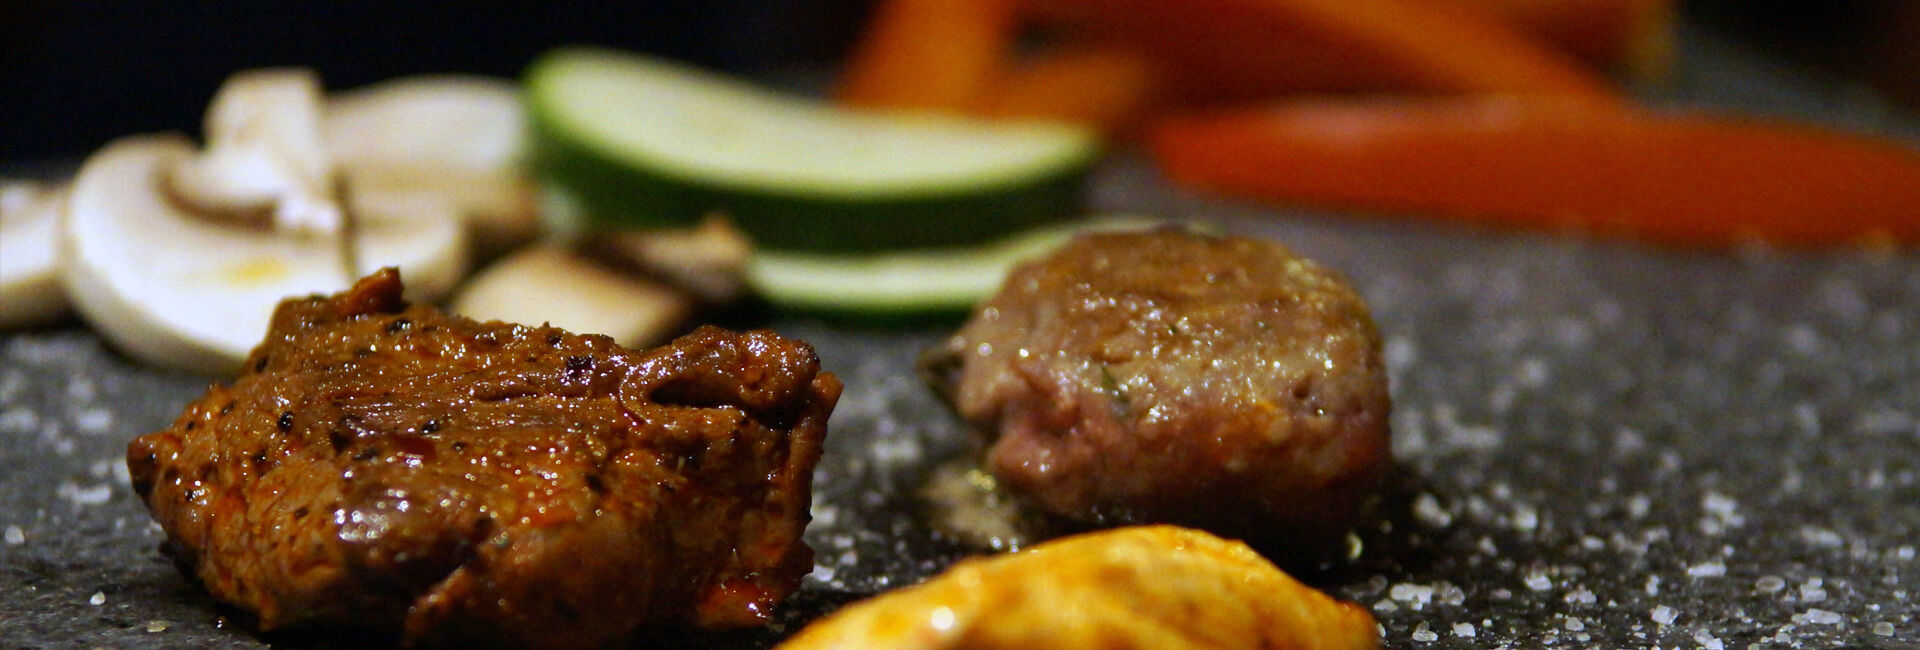 Grilled meat as part of the Grill Tasting package - Gasterij 't Karrewiel